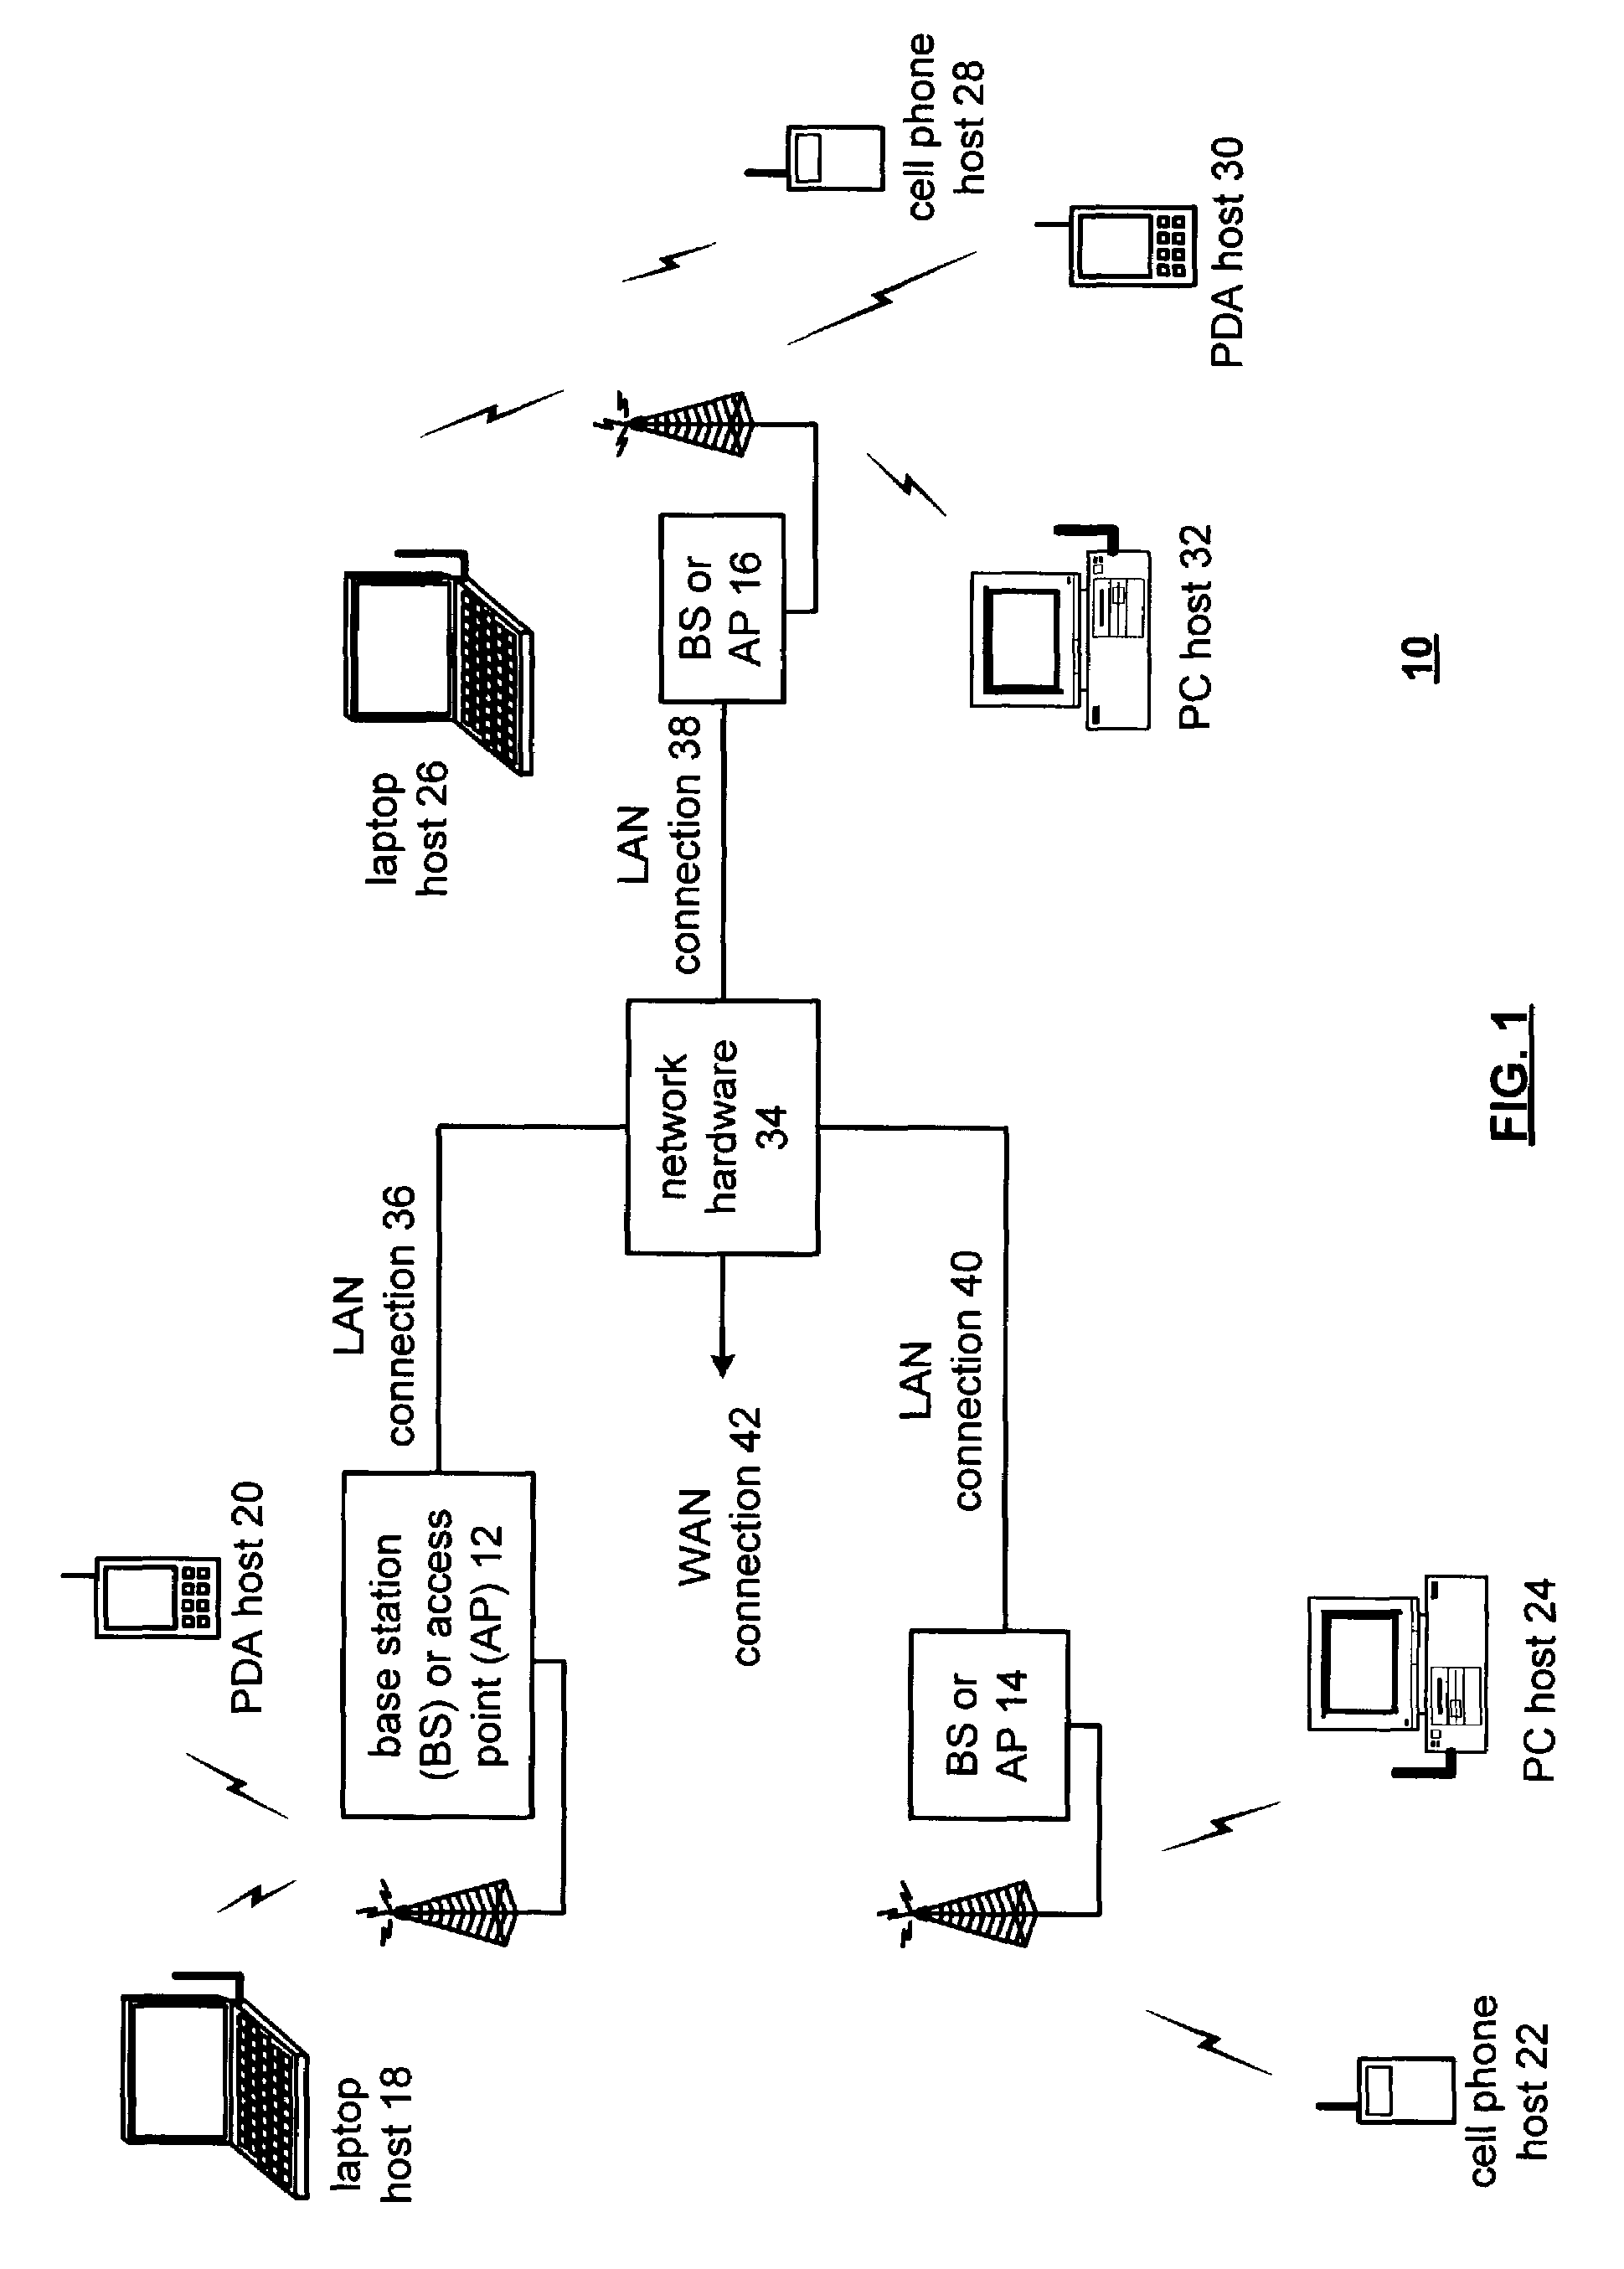 Channel estimation in a spread spectrum receiver